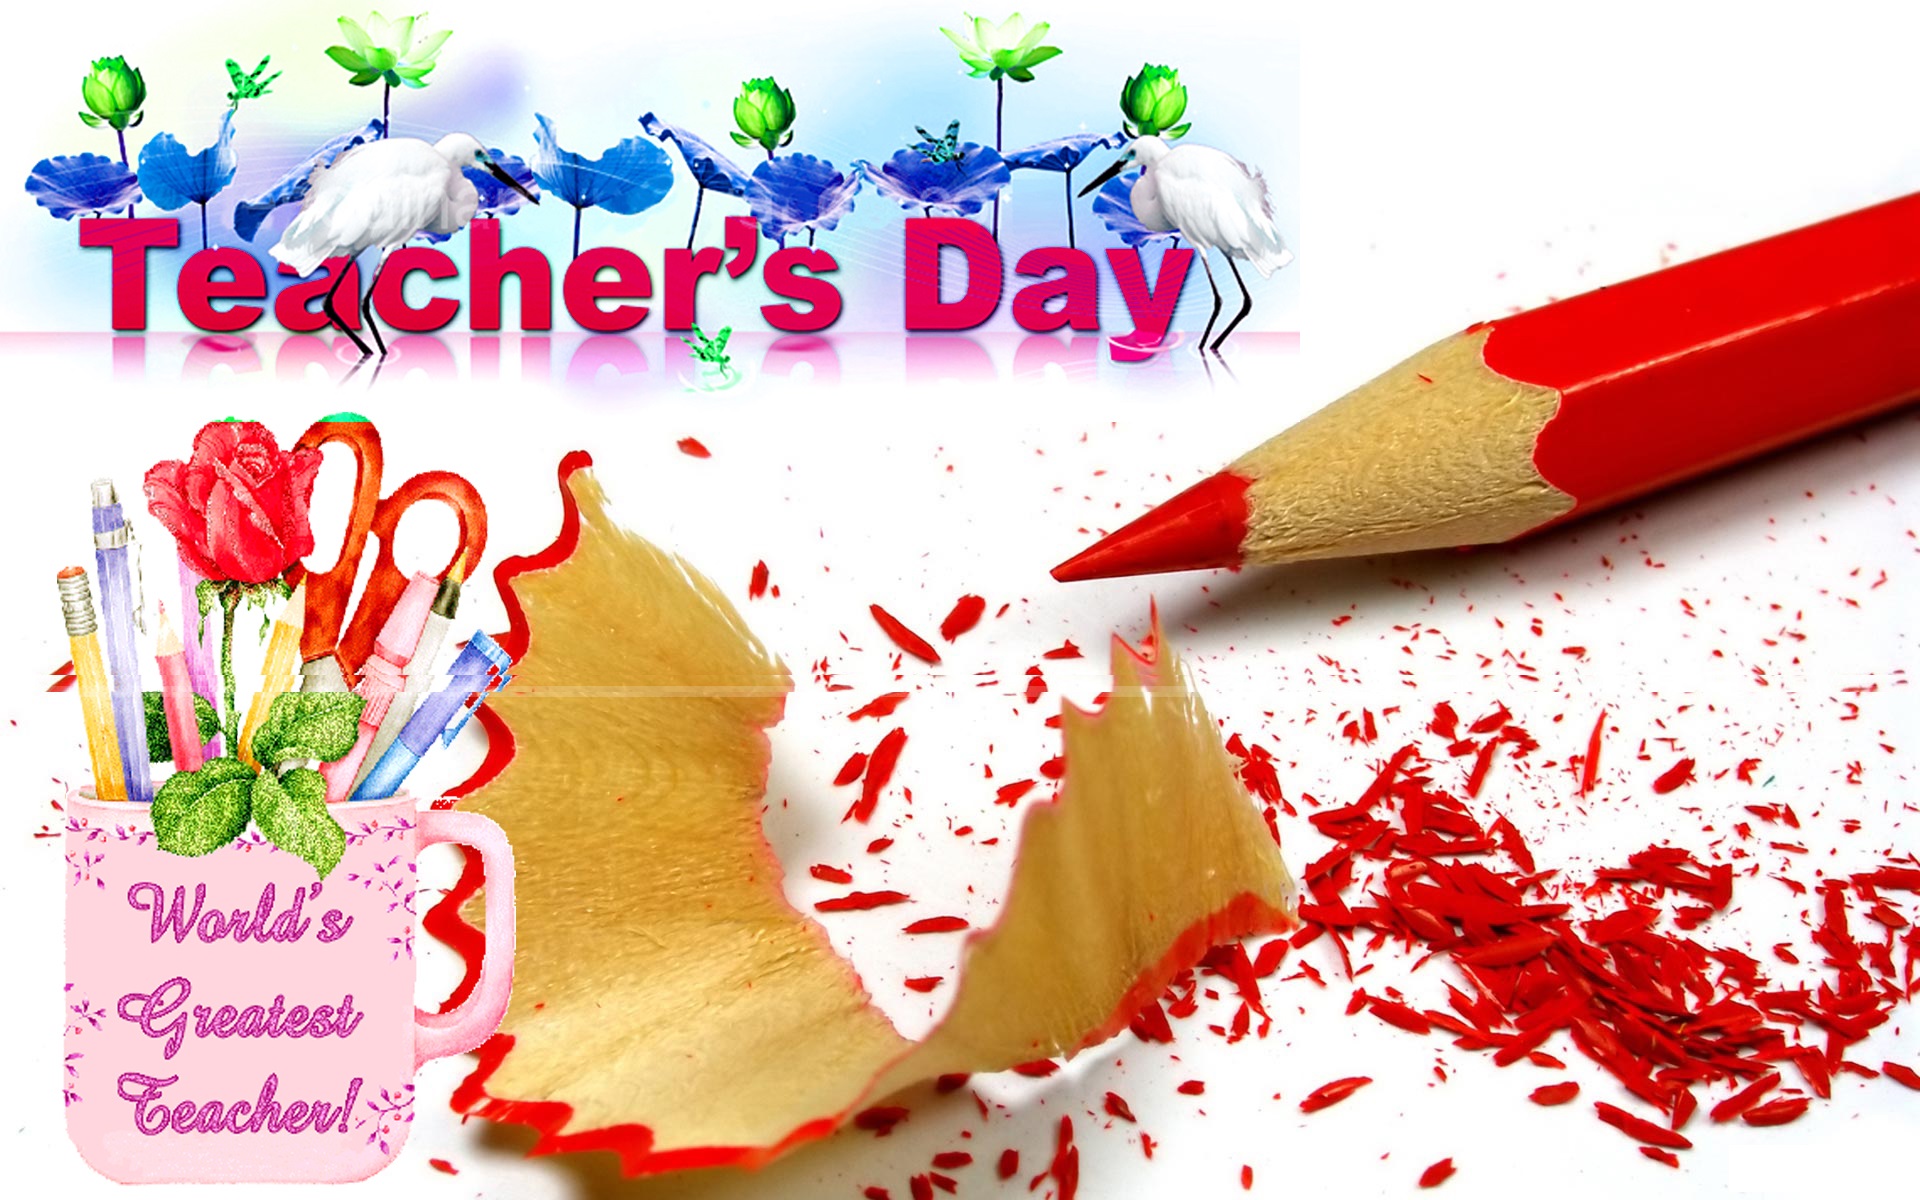 world-teachers-day-image